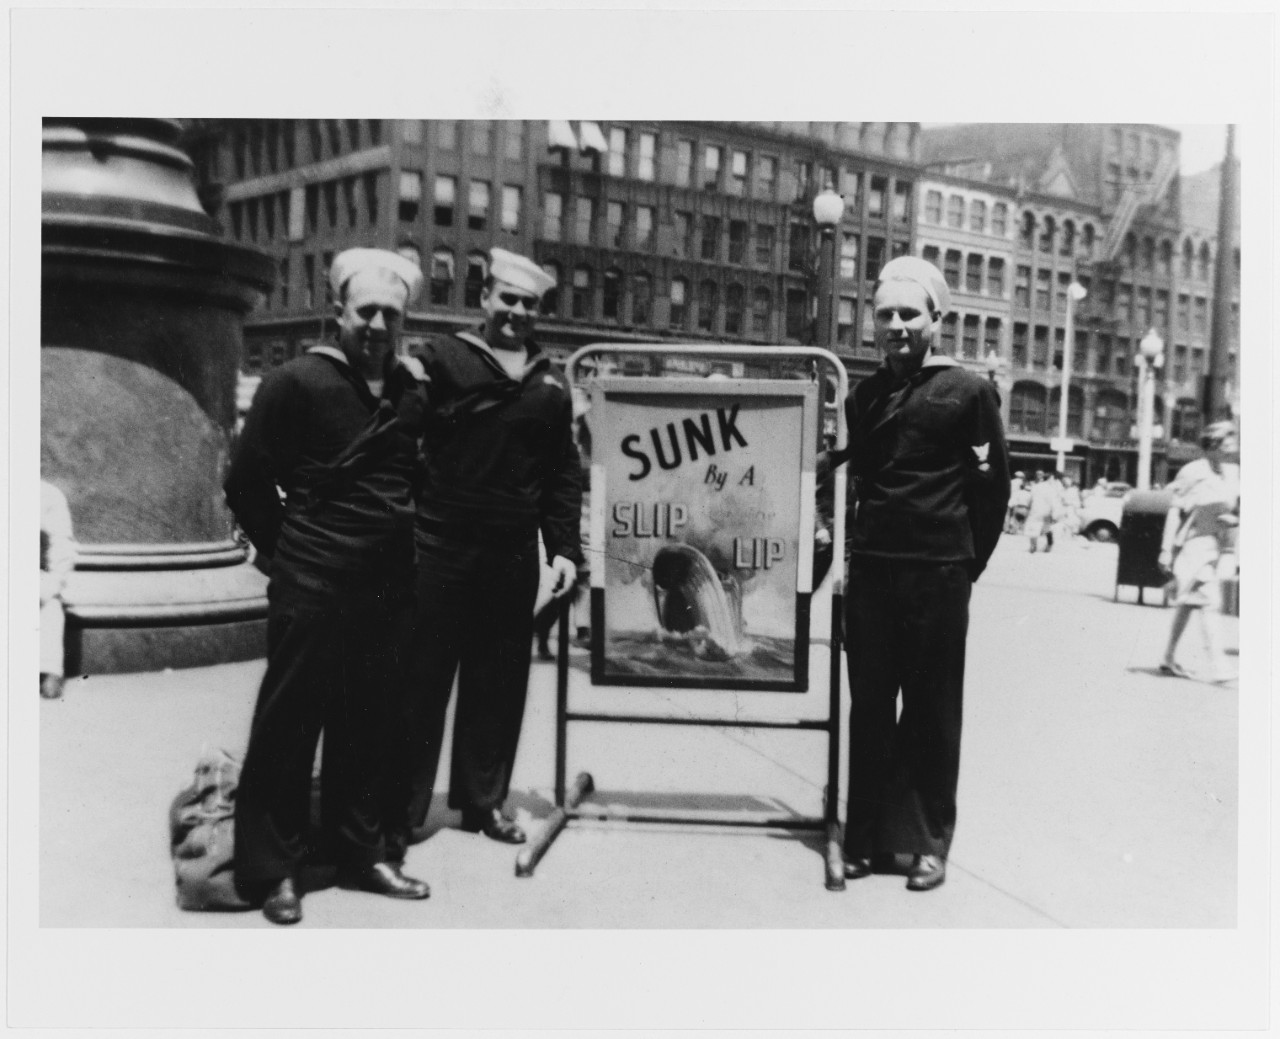 Navy men posing by a poster in Boston.